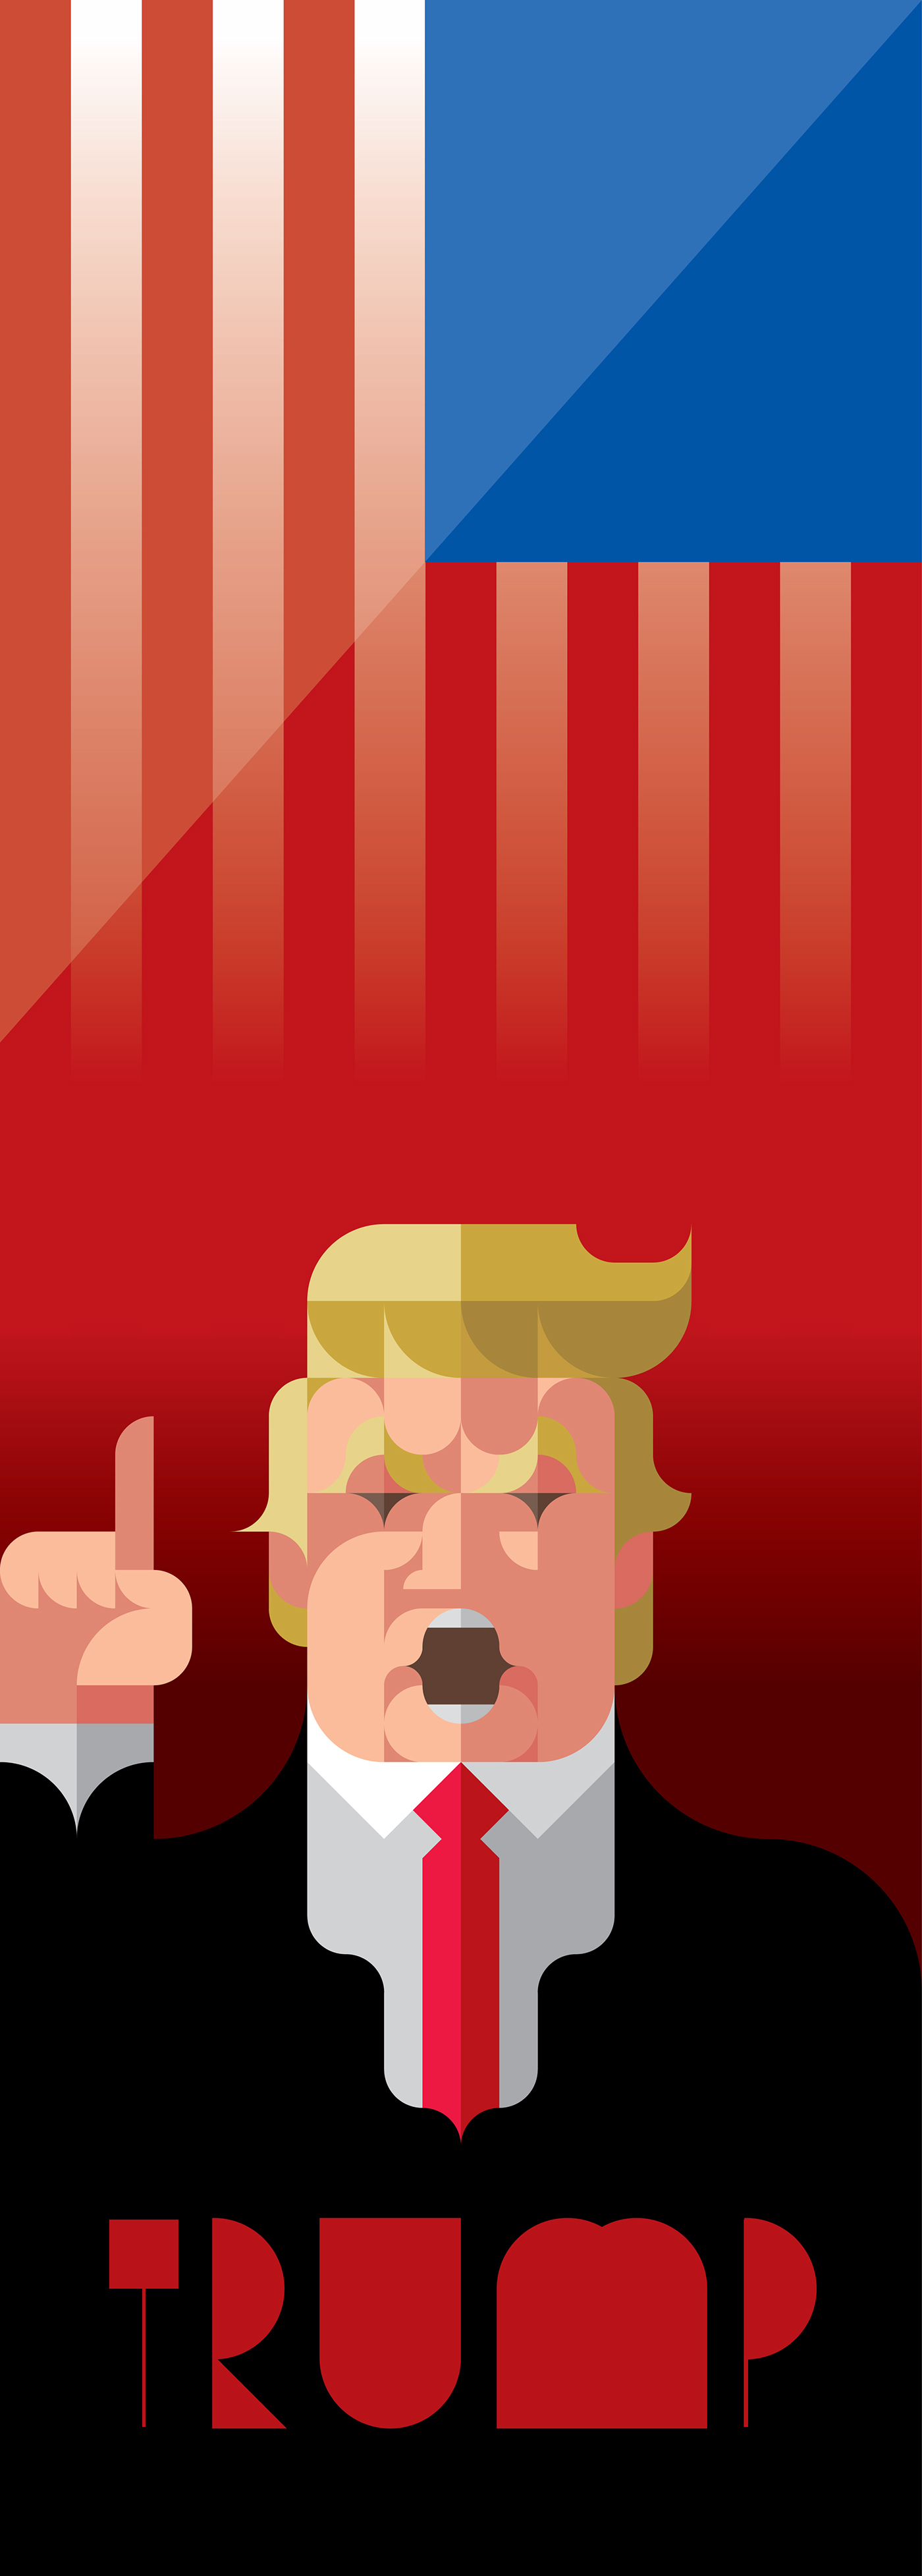 geometry simple grid minimal iconic Character Trump president america portrait